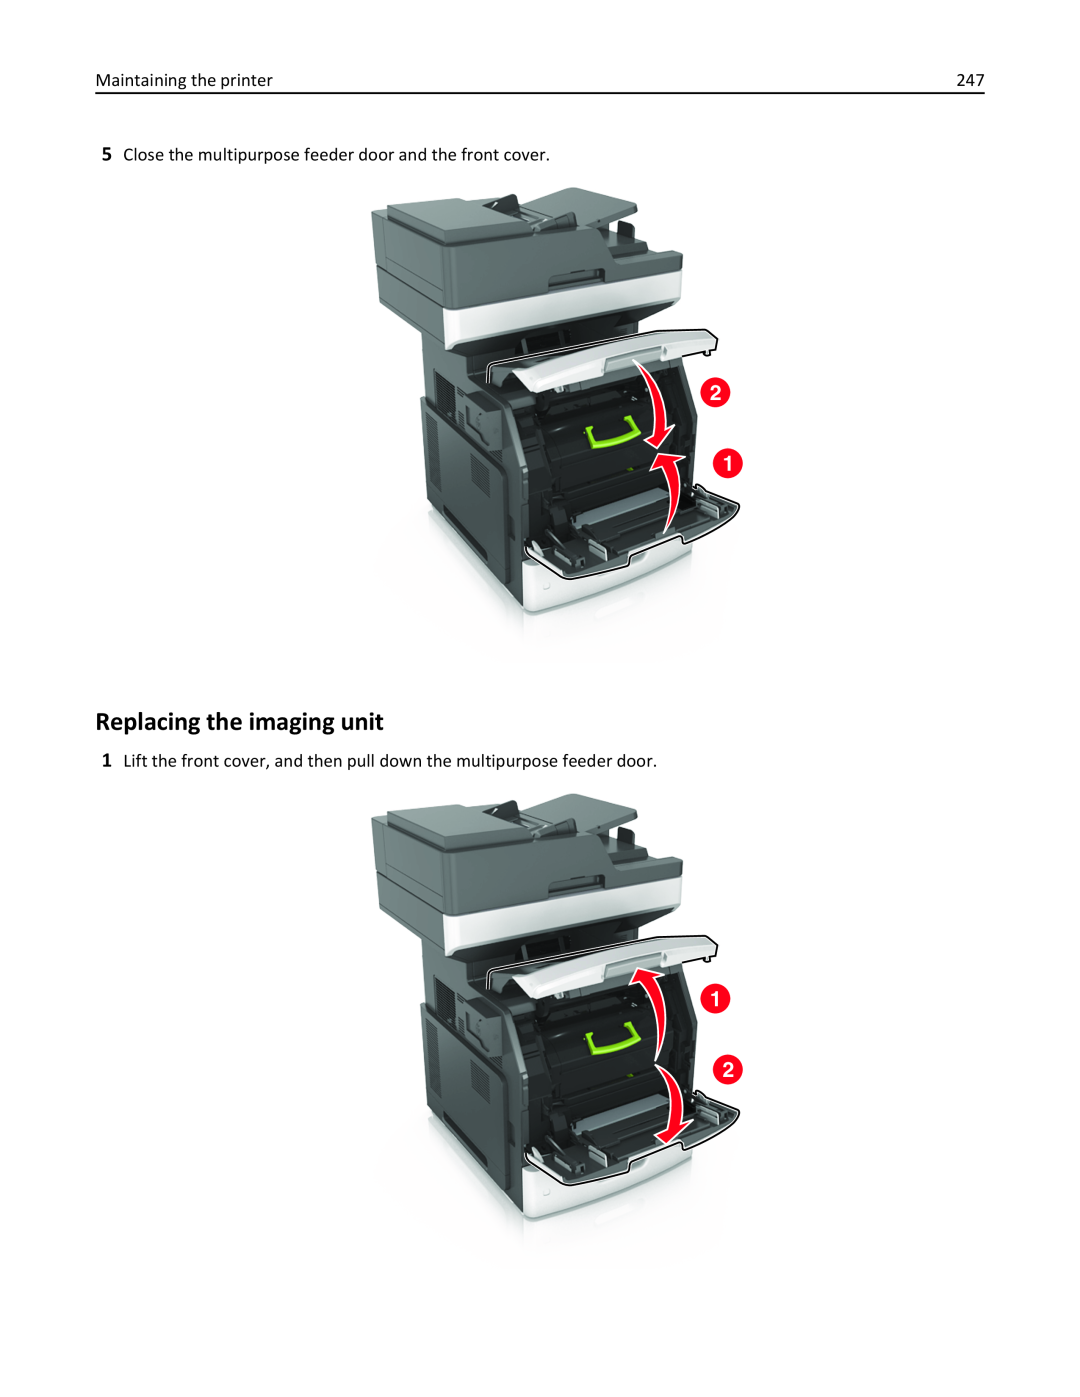 Lexmark 24T7310, MX710DHE, 237, 037 manual Replacing the imaging unit, Maintaining the printer 